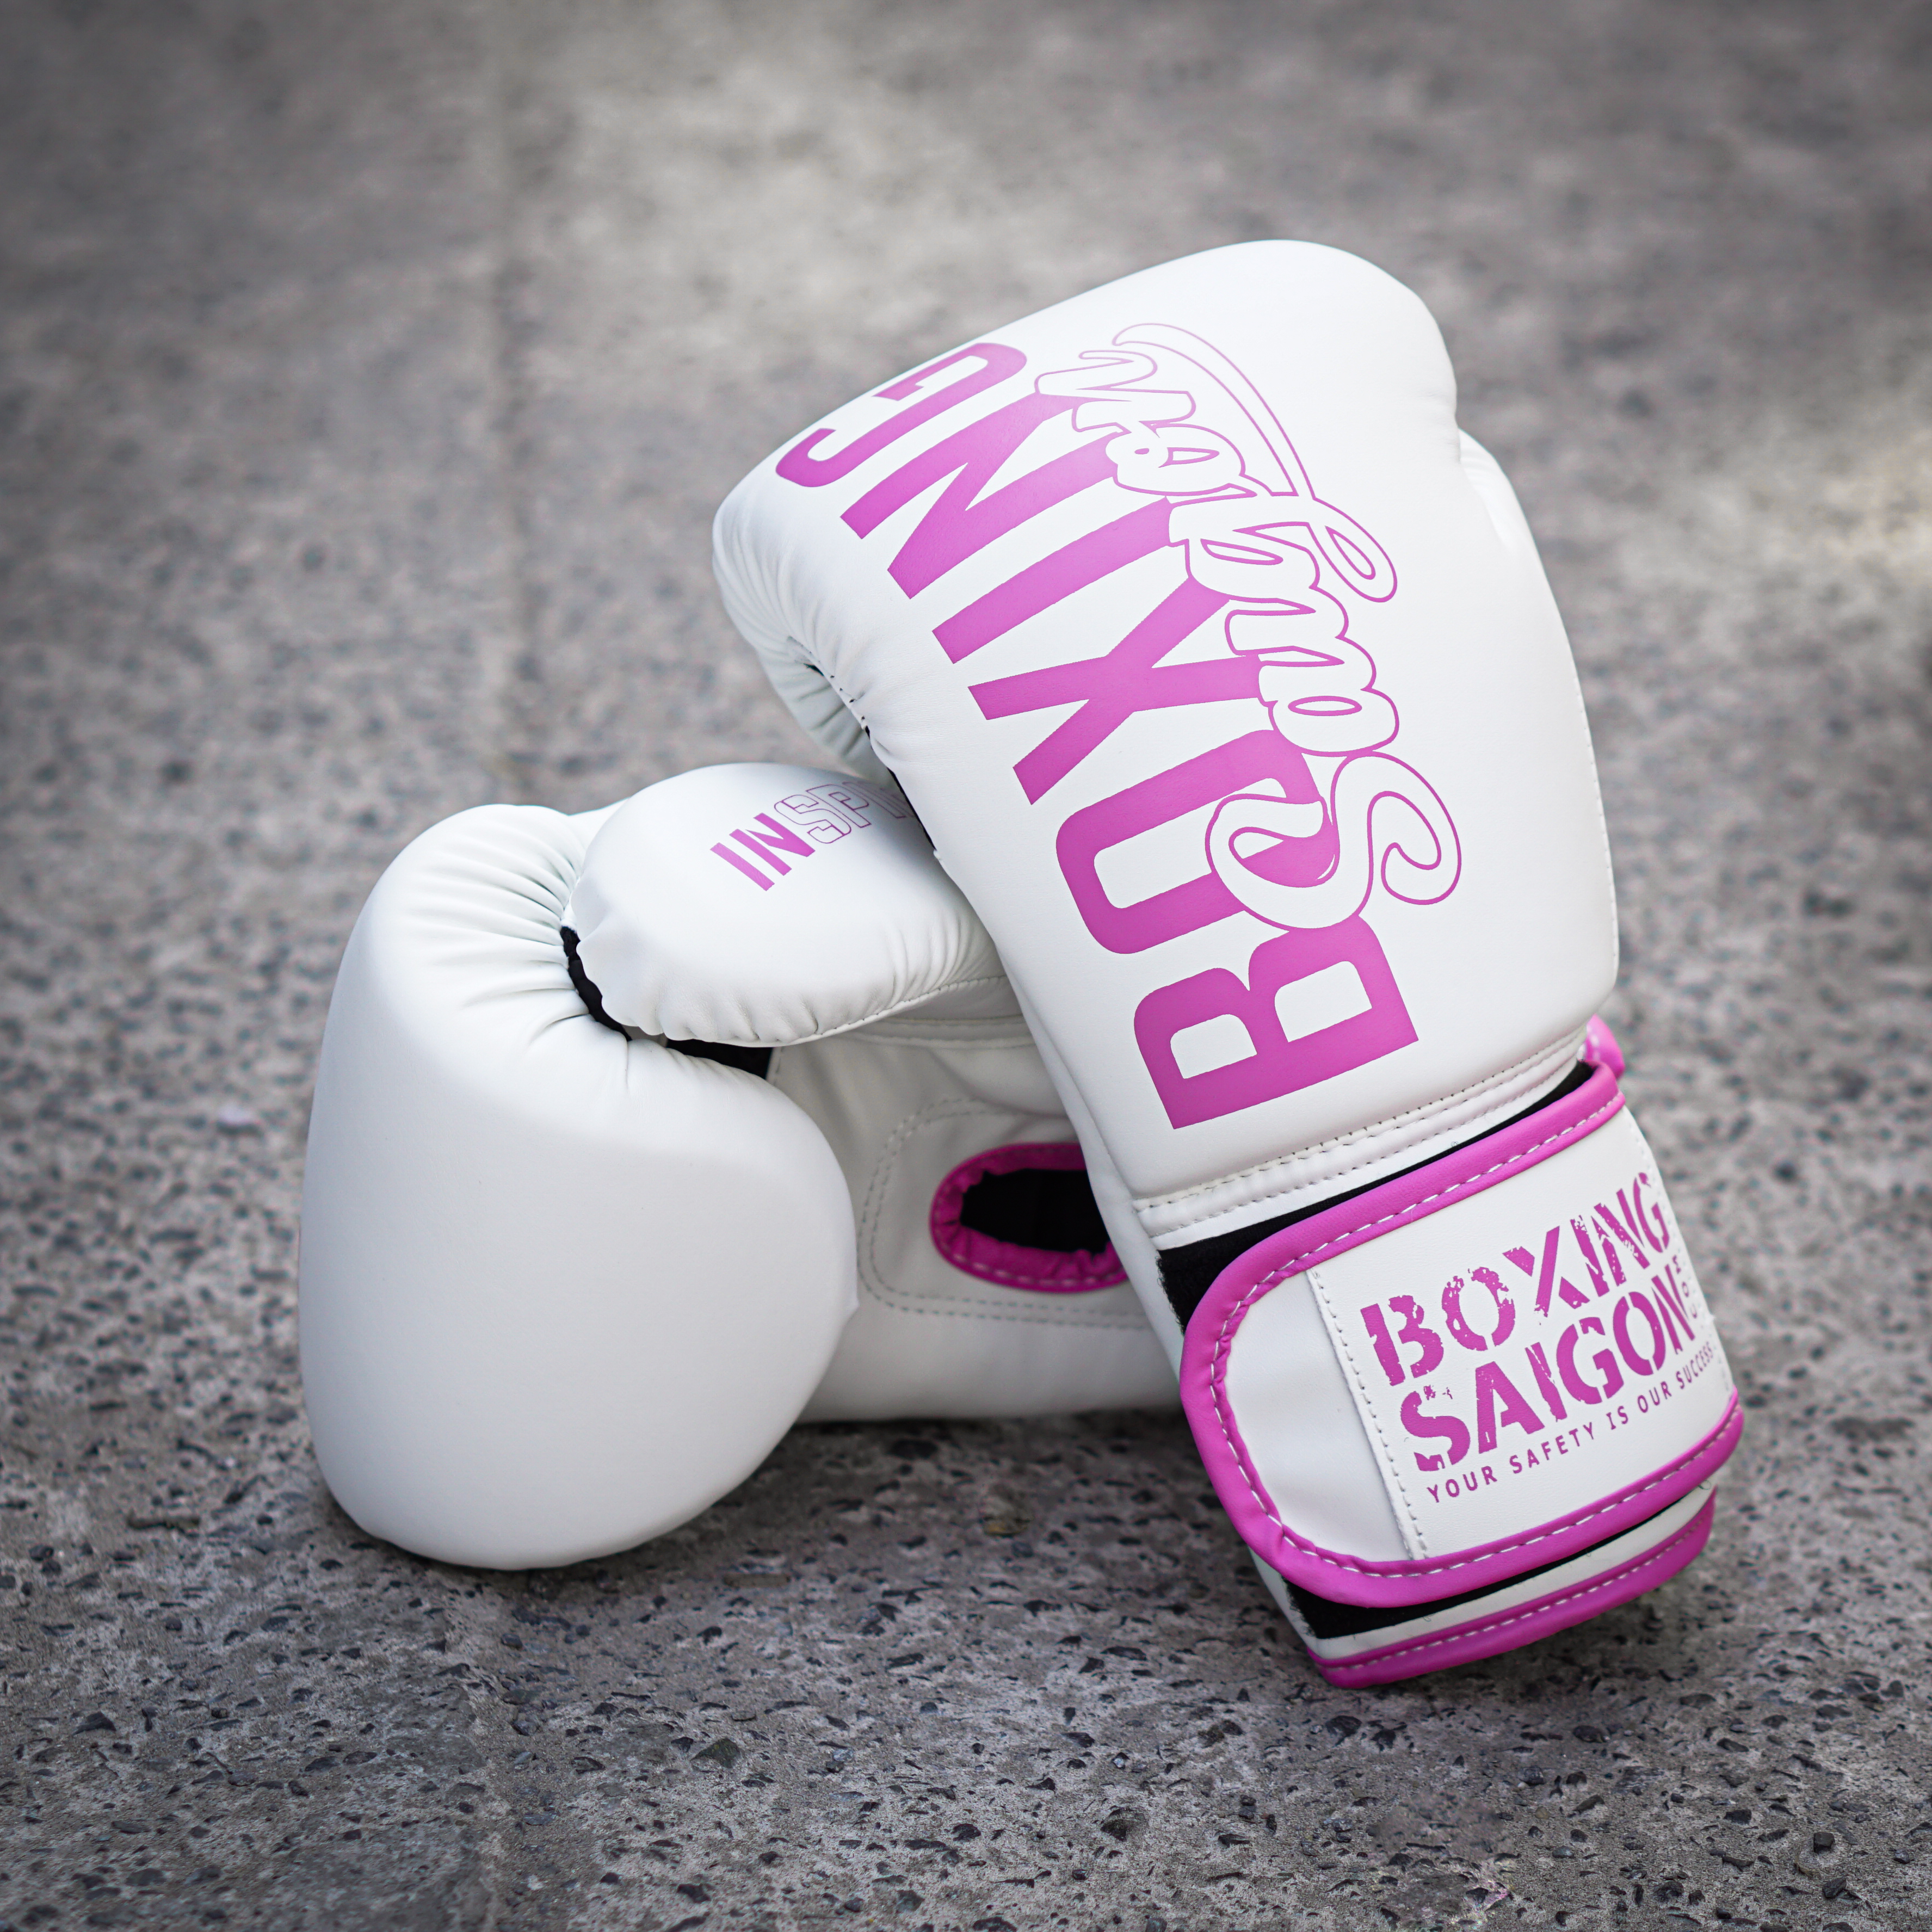 Găng tay Boxing Saigon Inspire - White/Pink